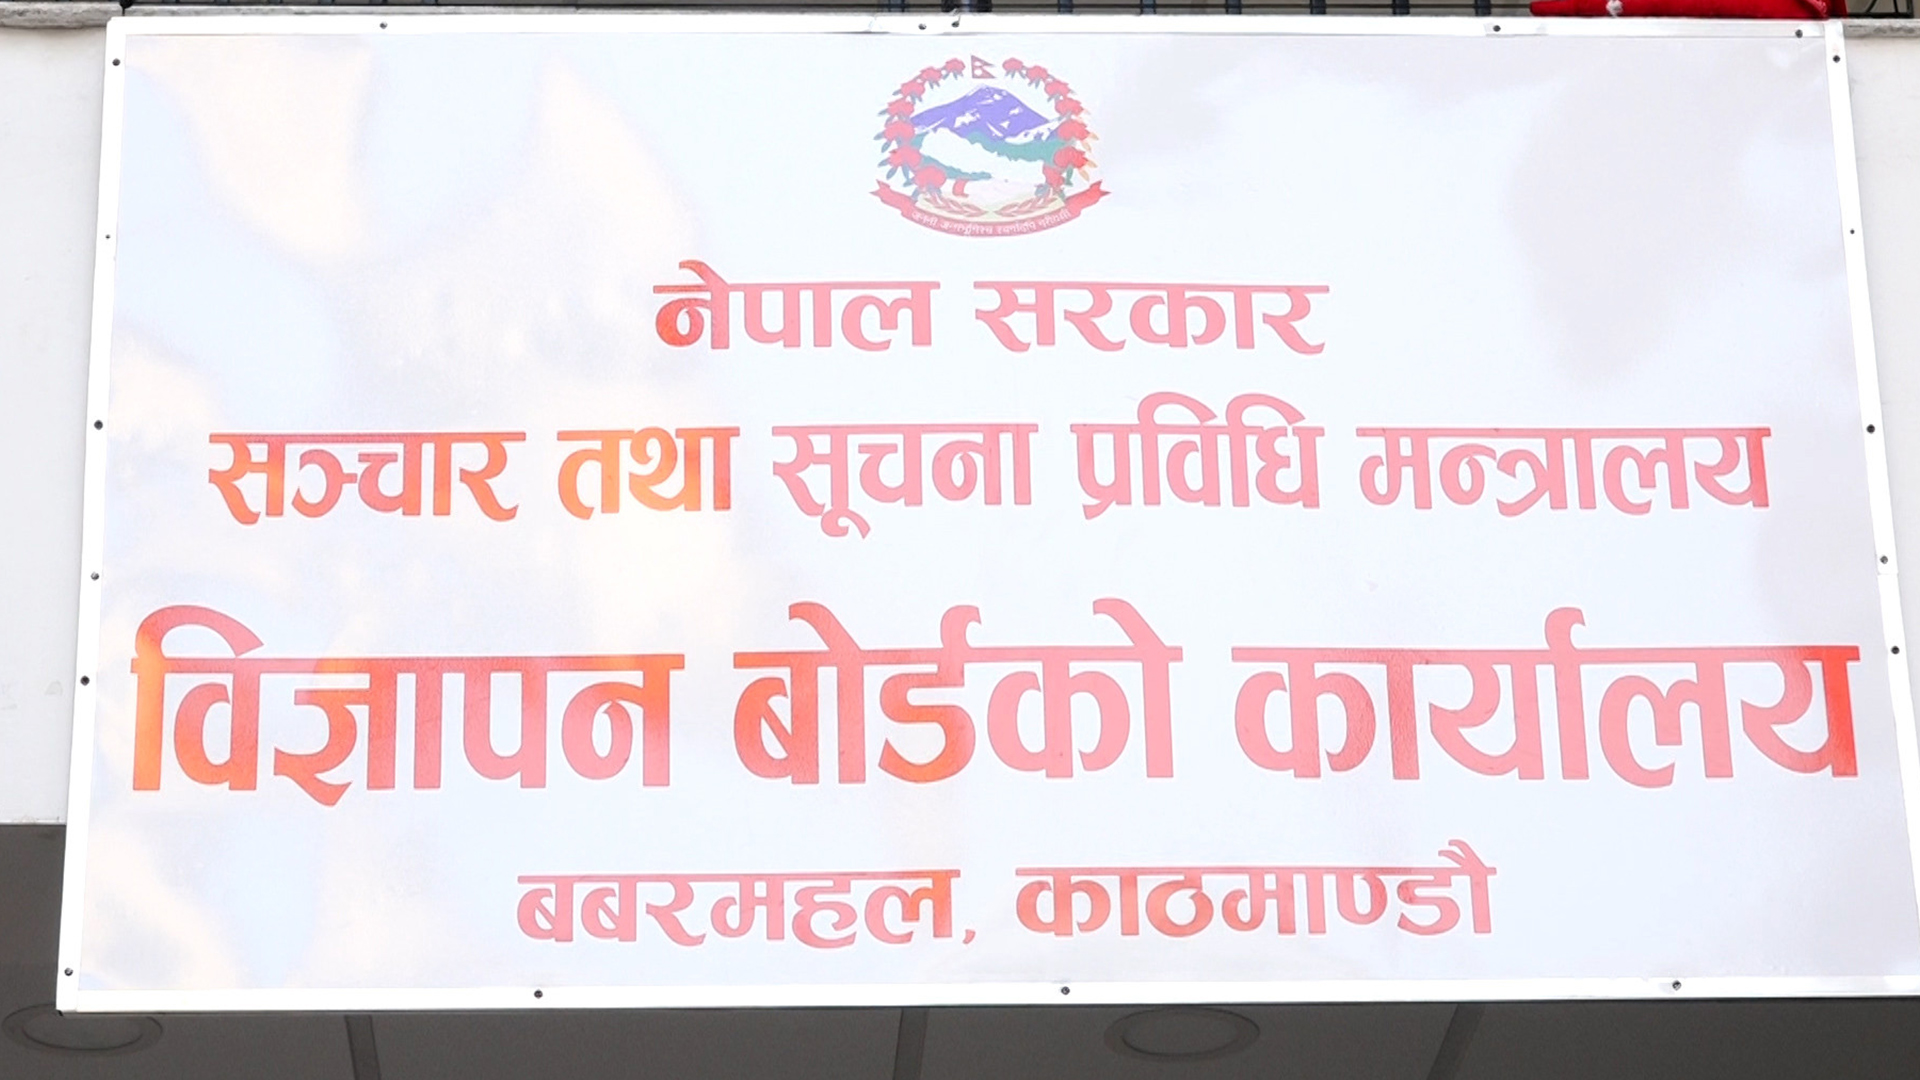 Establishment of Advertising Board Office by Parbat Gurung